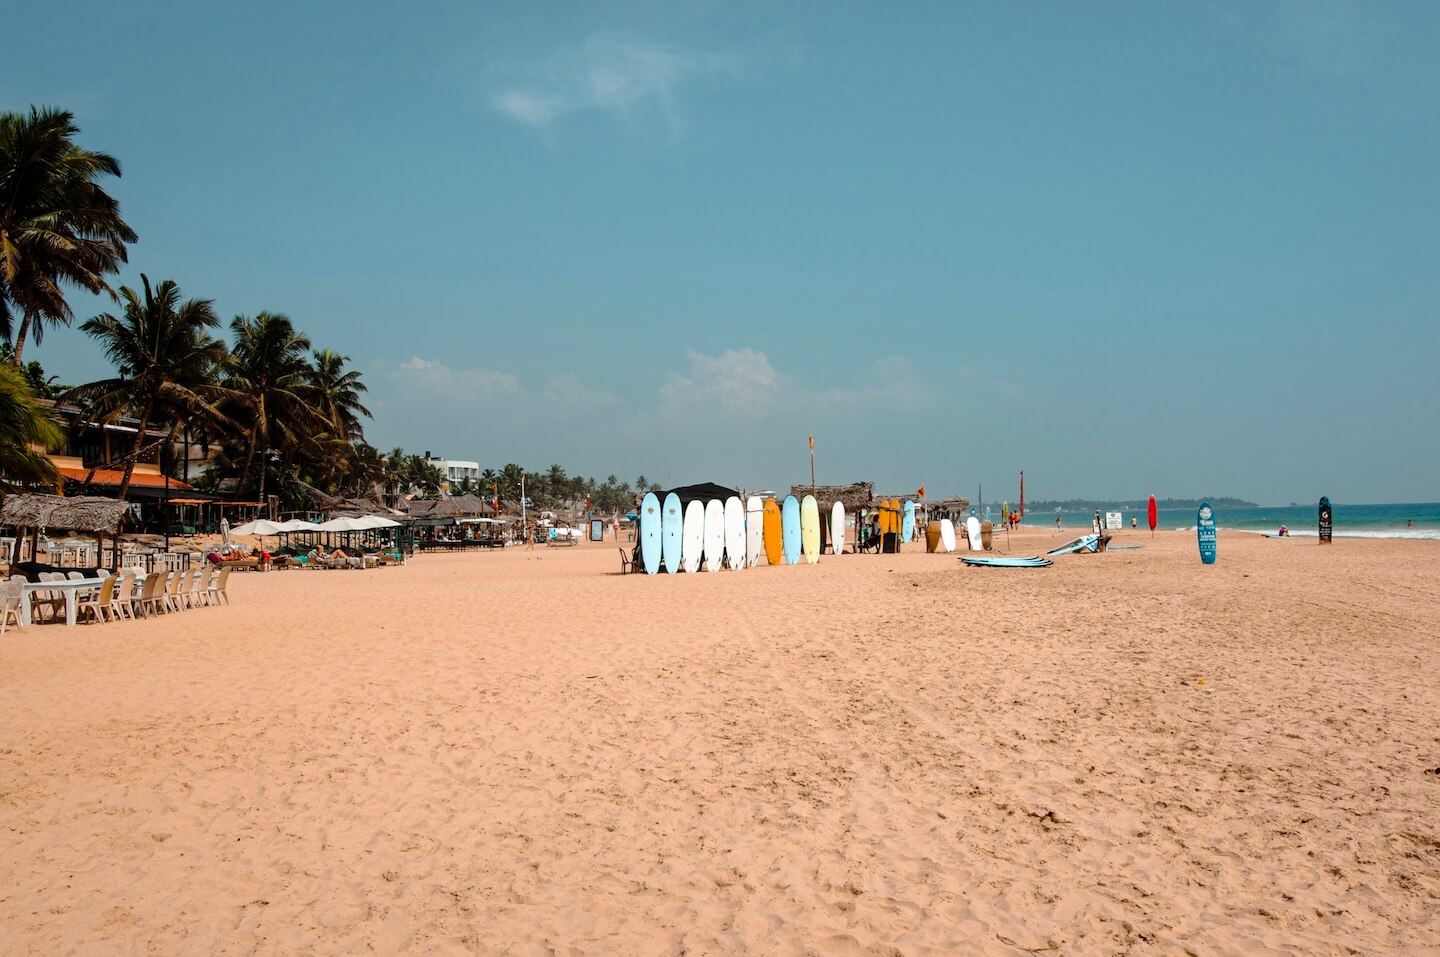 Surfing boards on the beach in Sri Lanka.